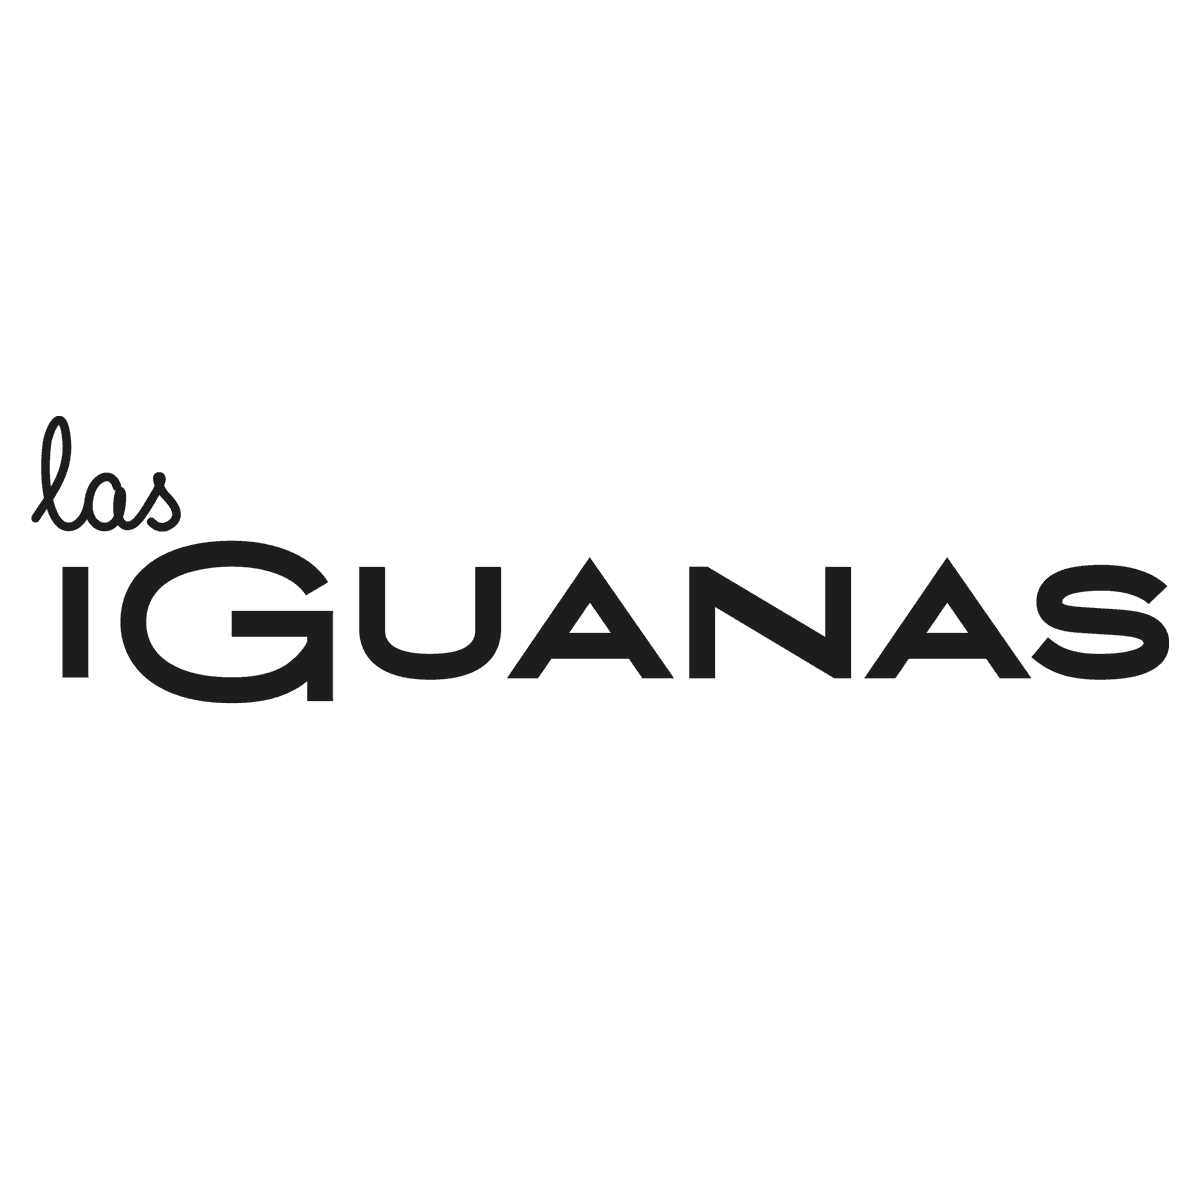 Las Iguanas Logo